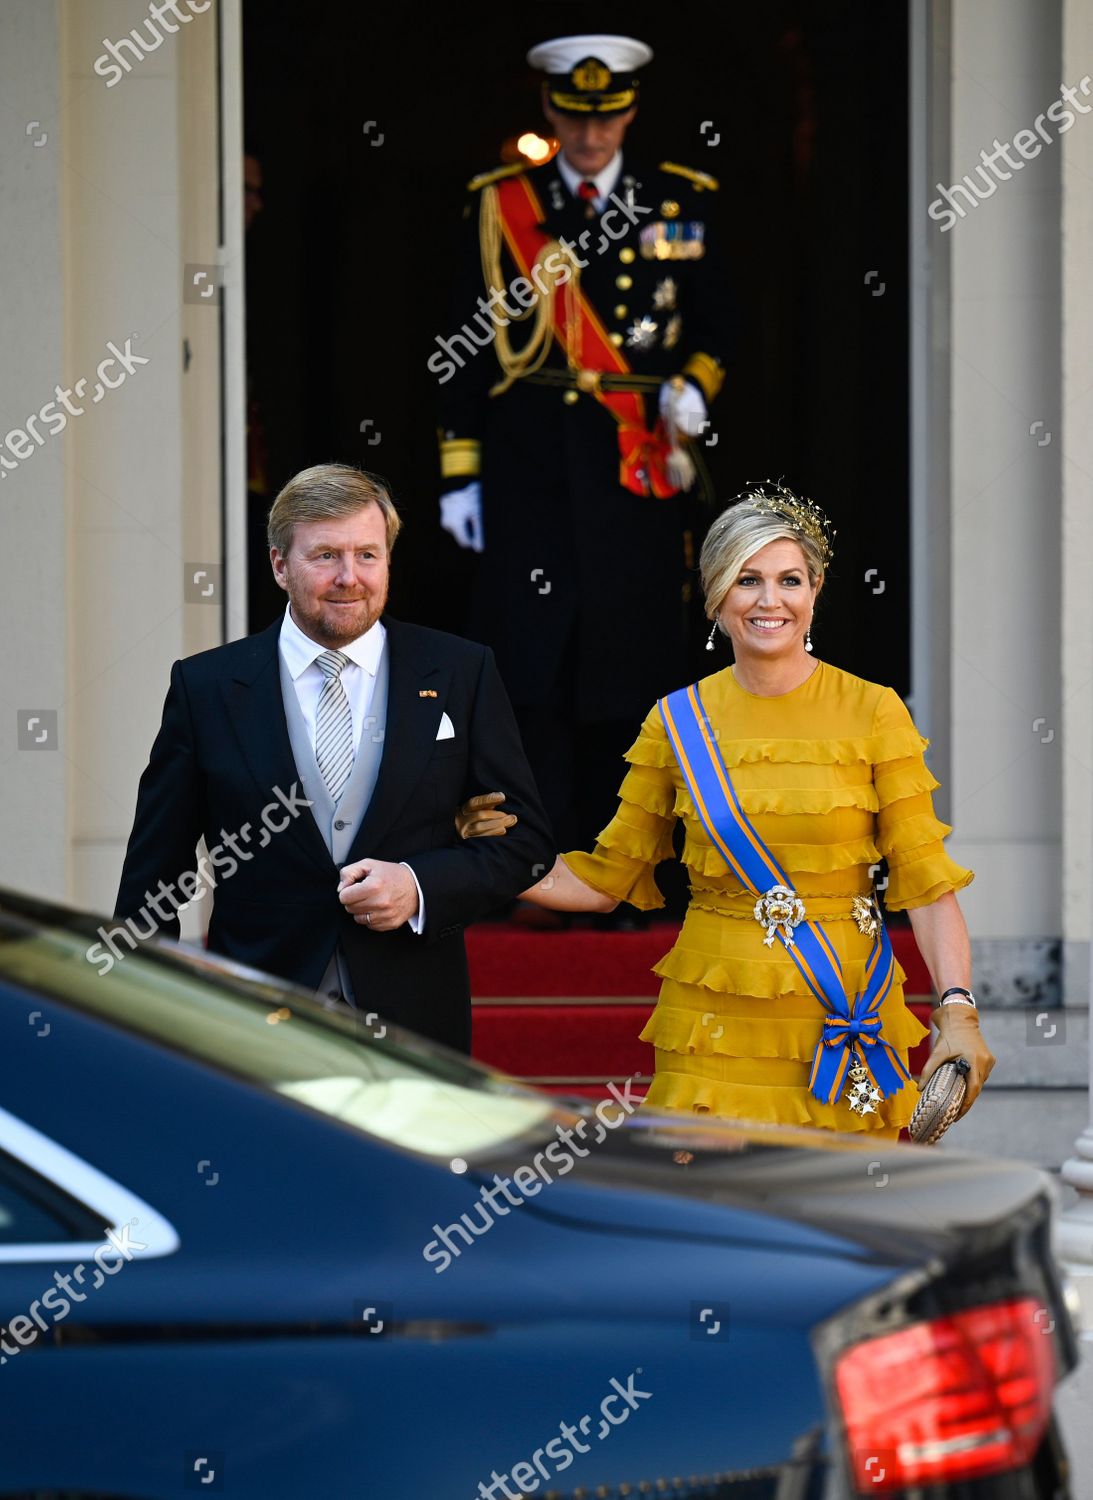 prinsjesdag-ceremony-the-hague-the-netherlands-shutterstock-editorial-10777335h.jpg